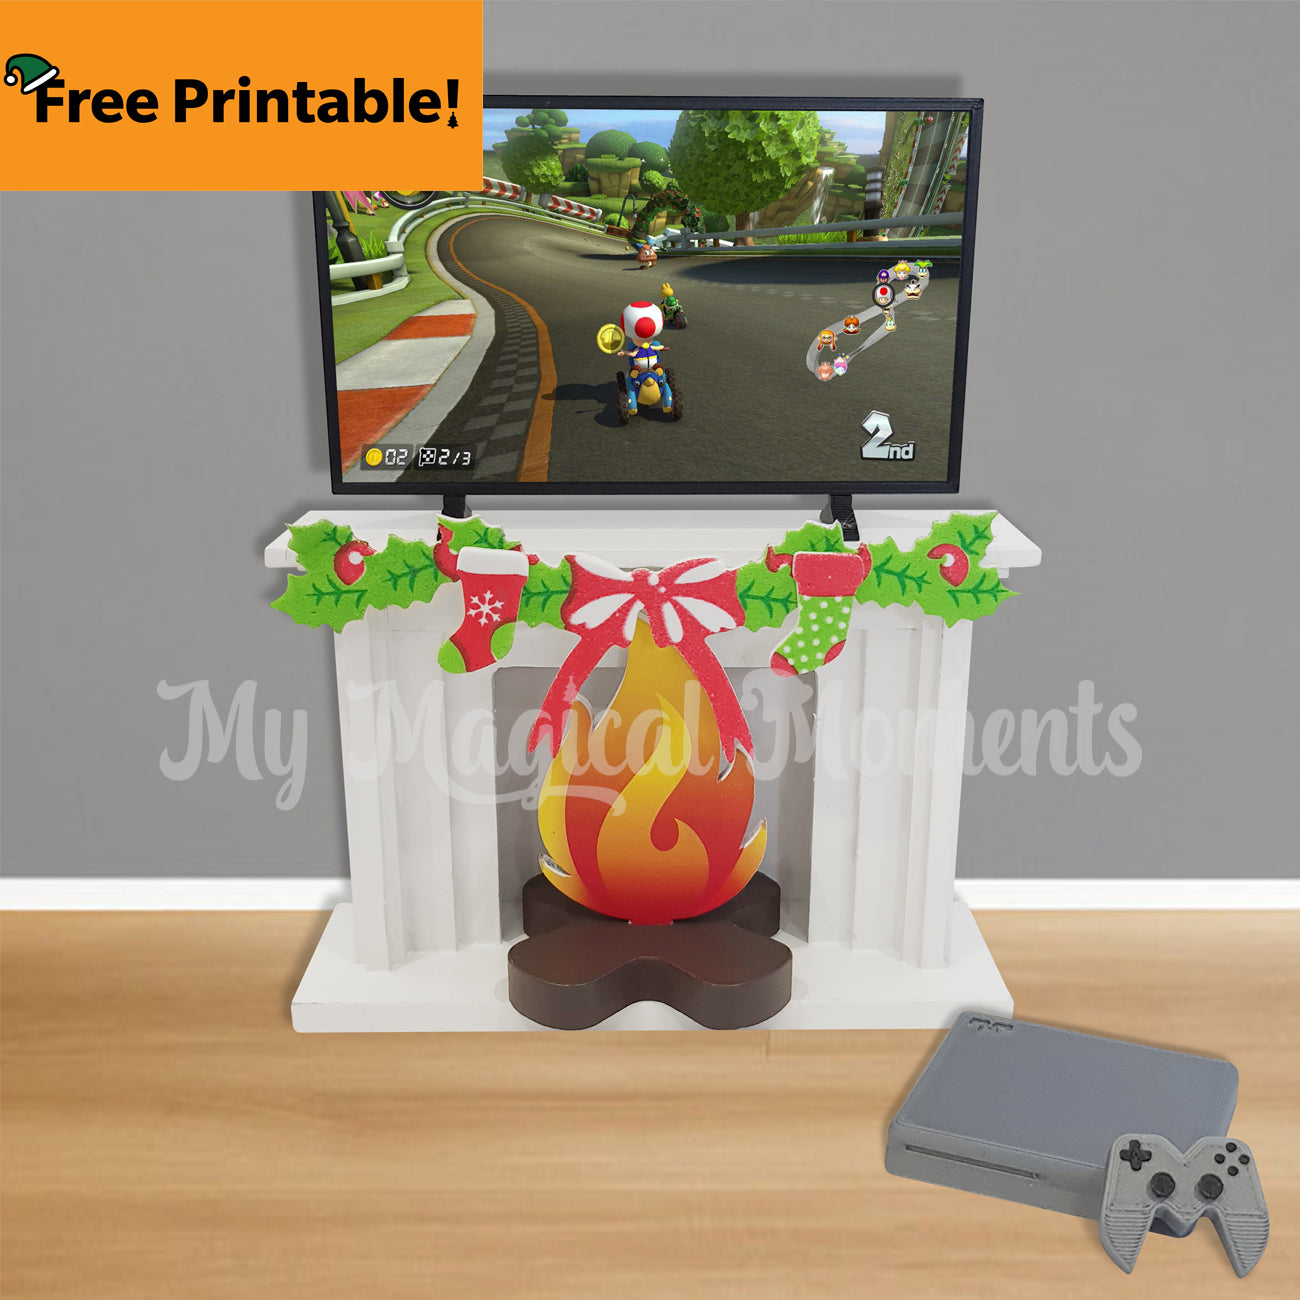 elf Tv Mario Kart screen free printable